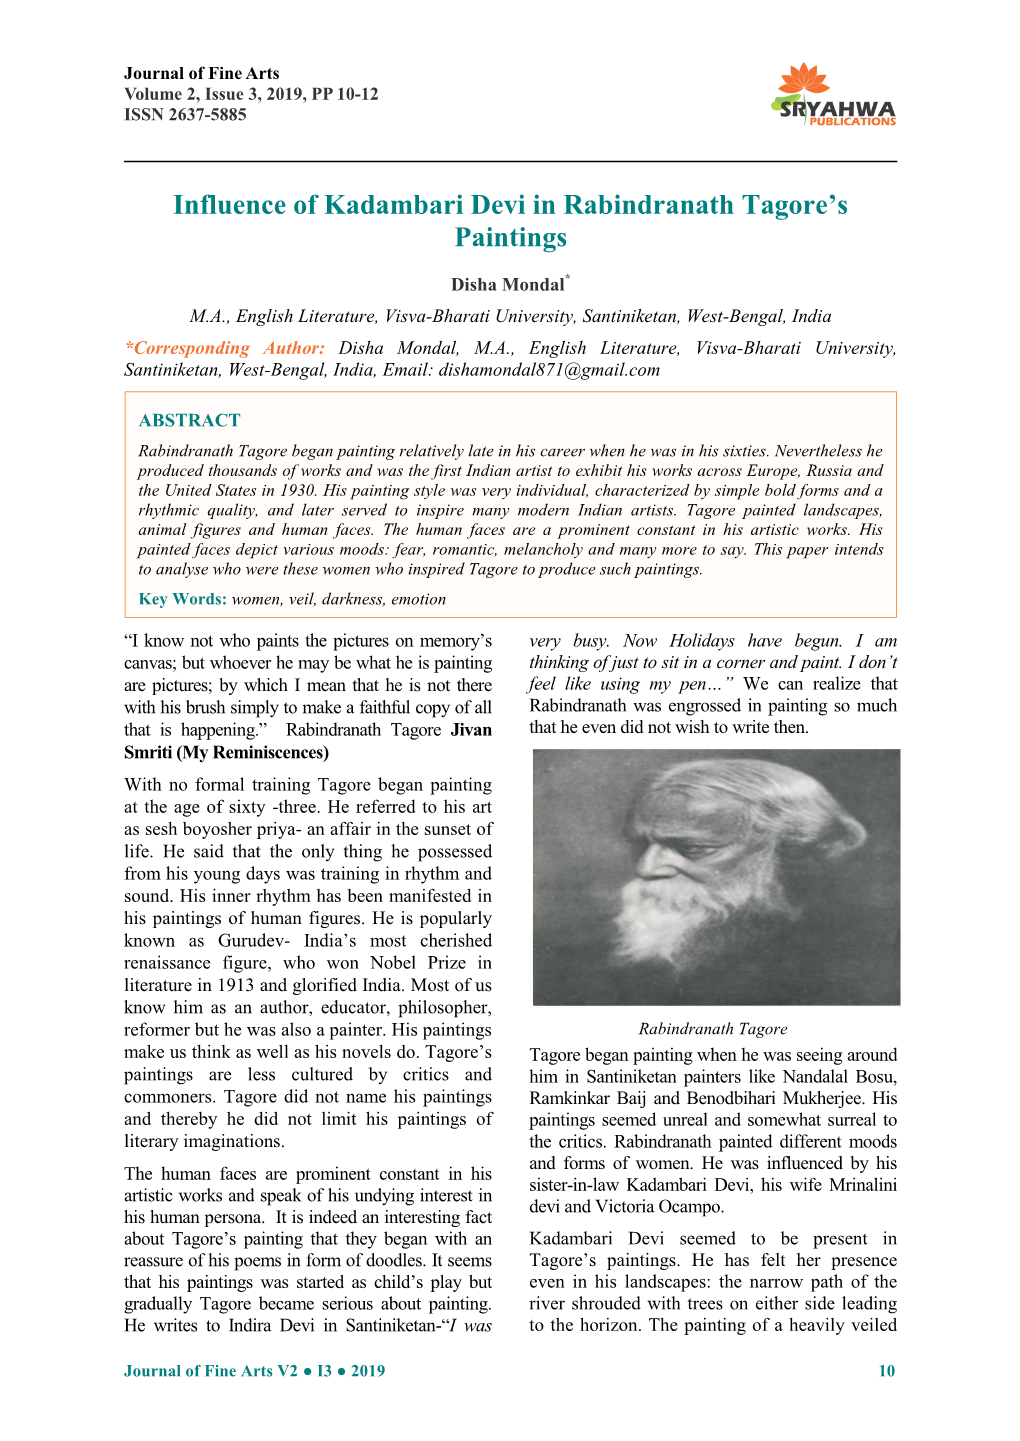 Influence of Kadambari Devi in Rabindranath Tagore's Paintings